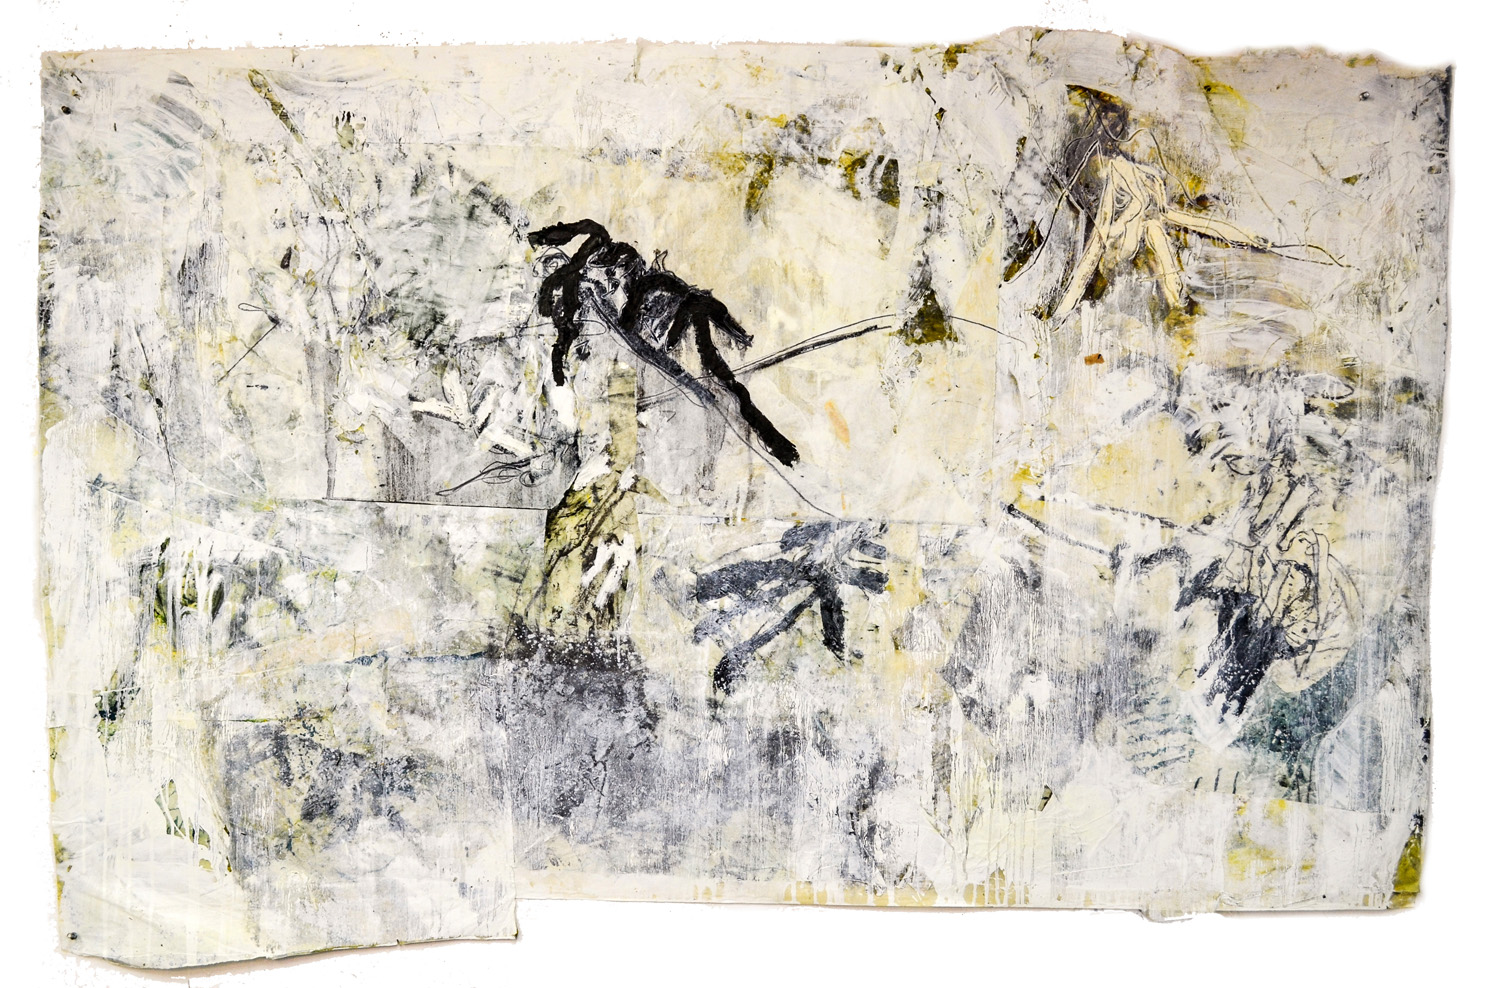 Claffey, Debra, Blue Star Dark, 2021, collaged oil, pigment stick, blending medium on sumi on masa paper, 36 x 72